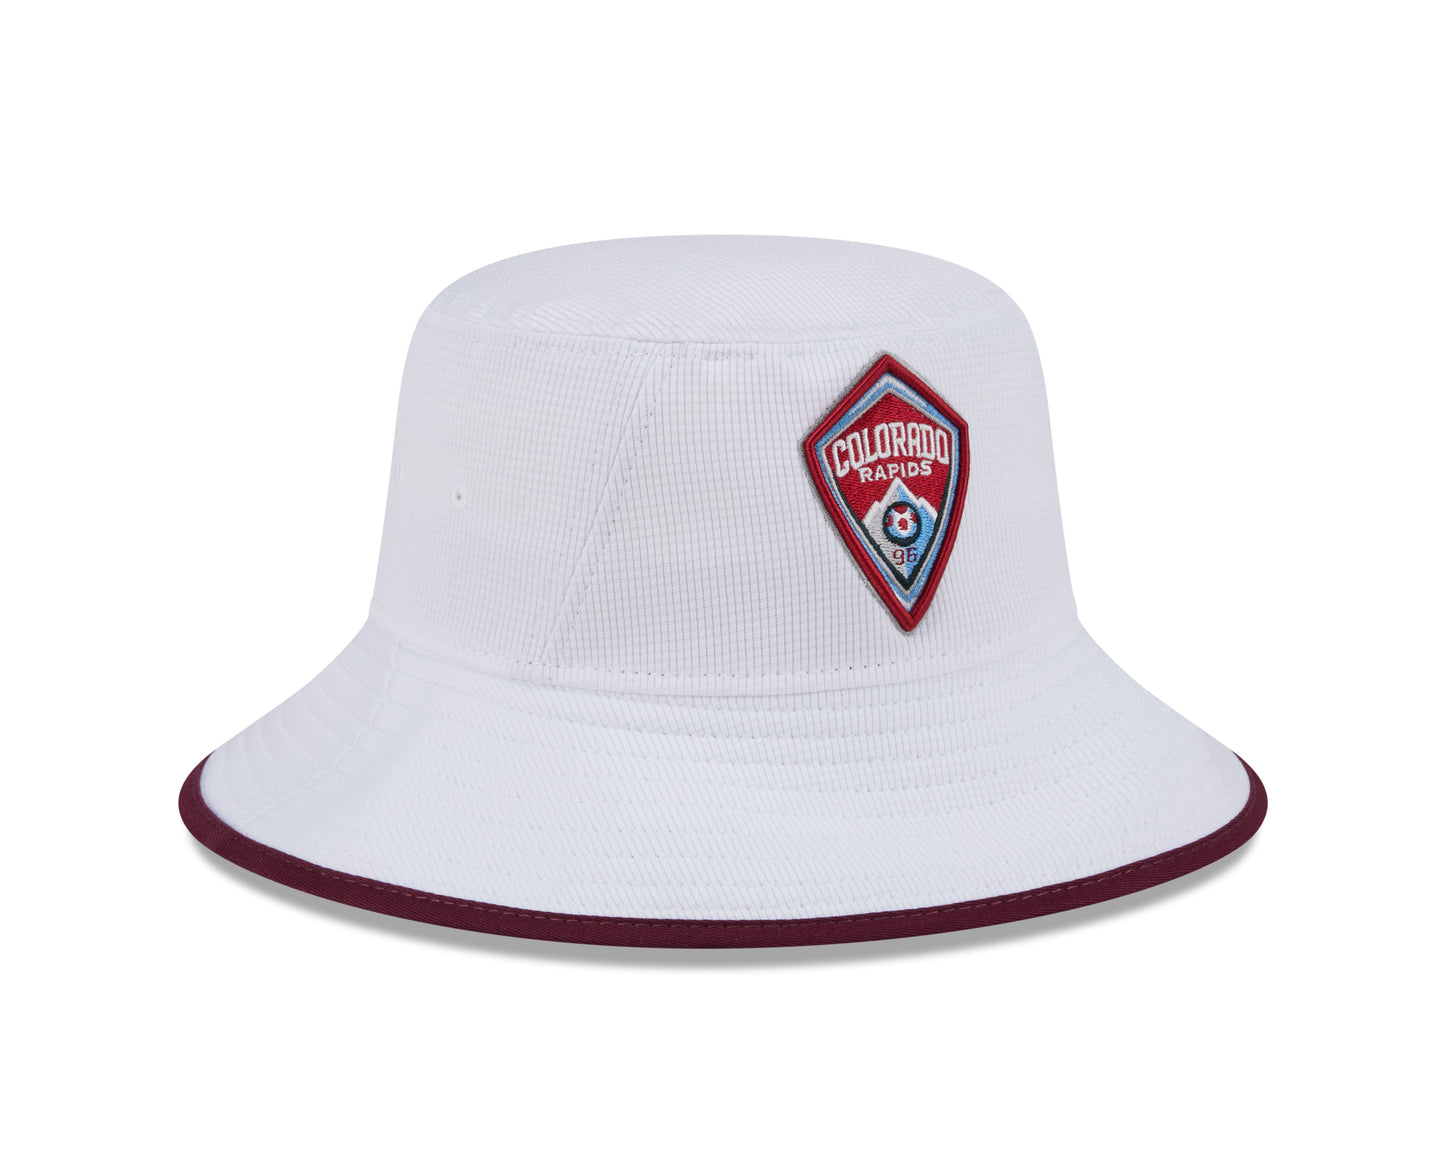 Rapids Gameday Bucket Hat - White/Burgundy